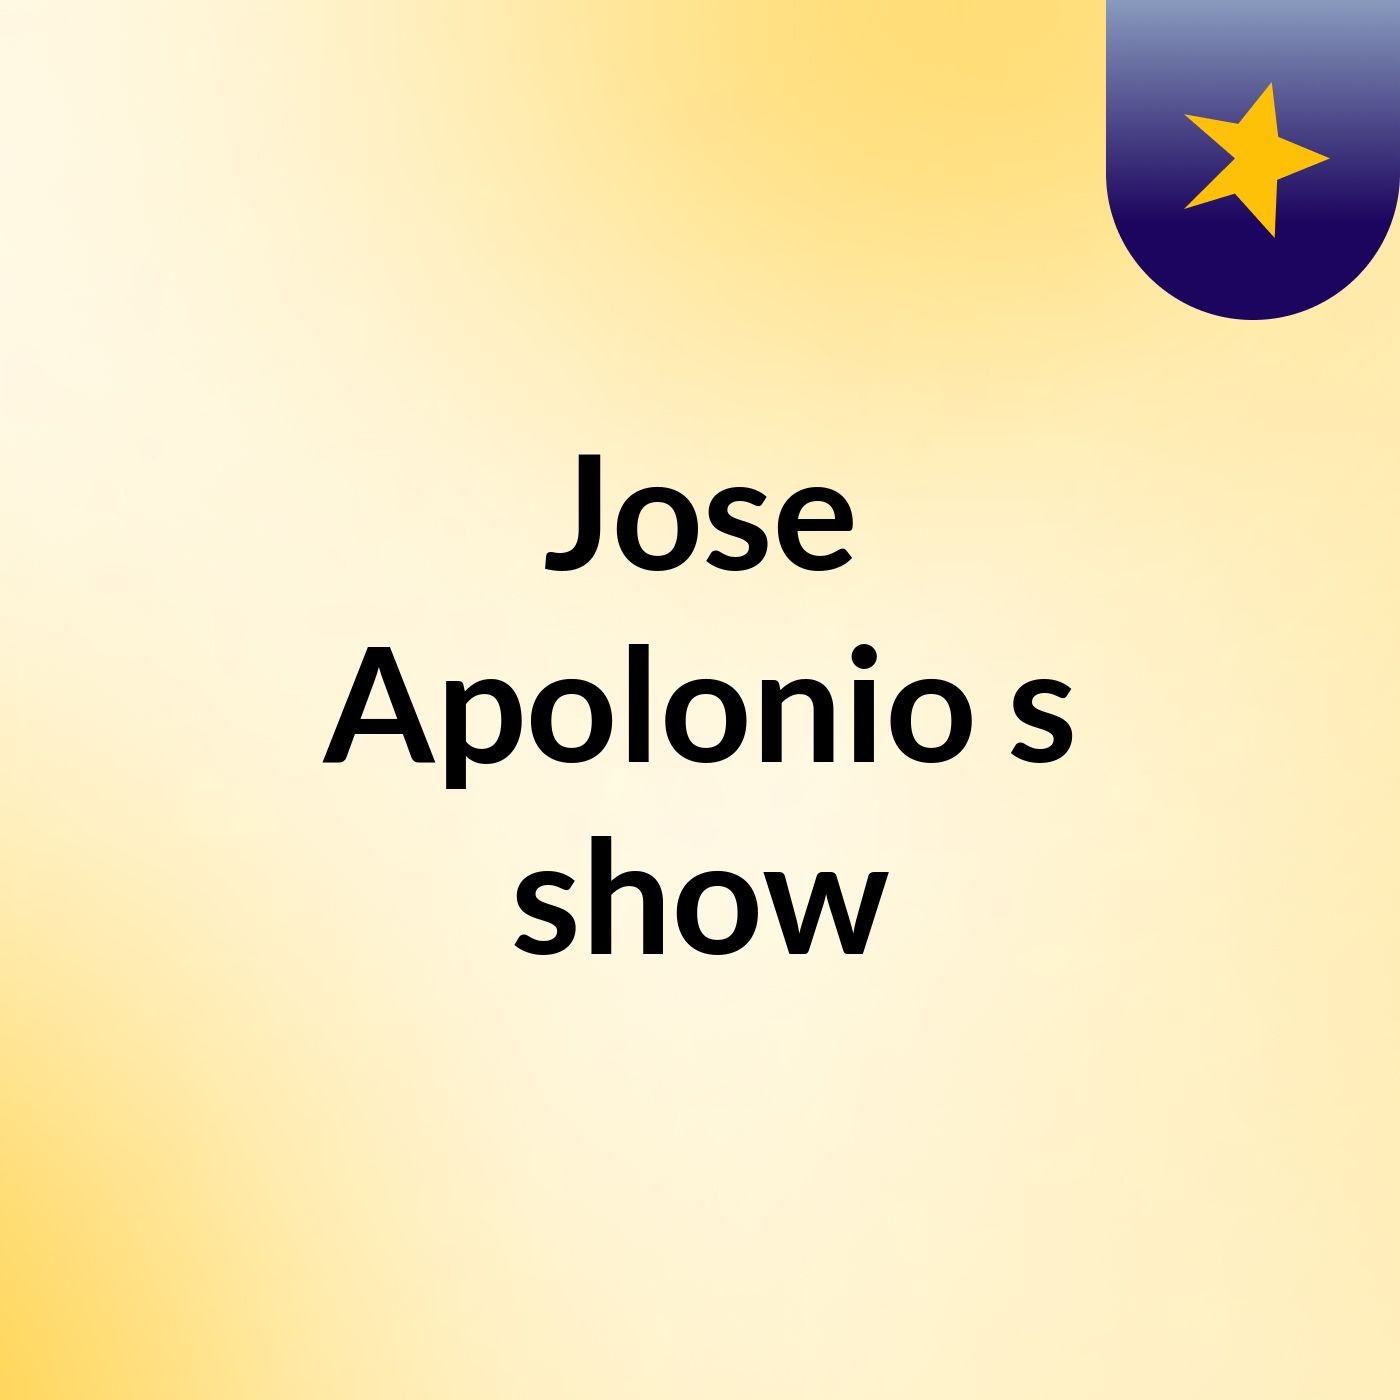 Jose Apolonio's show